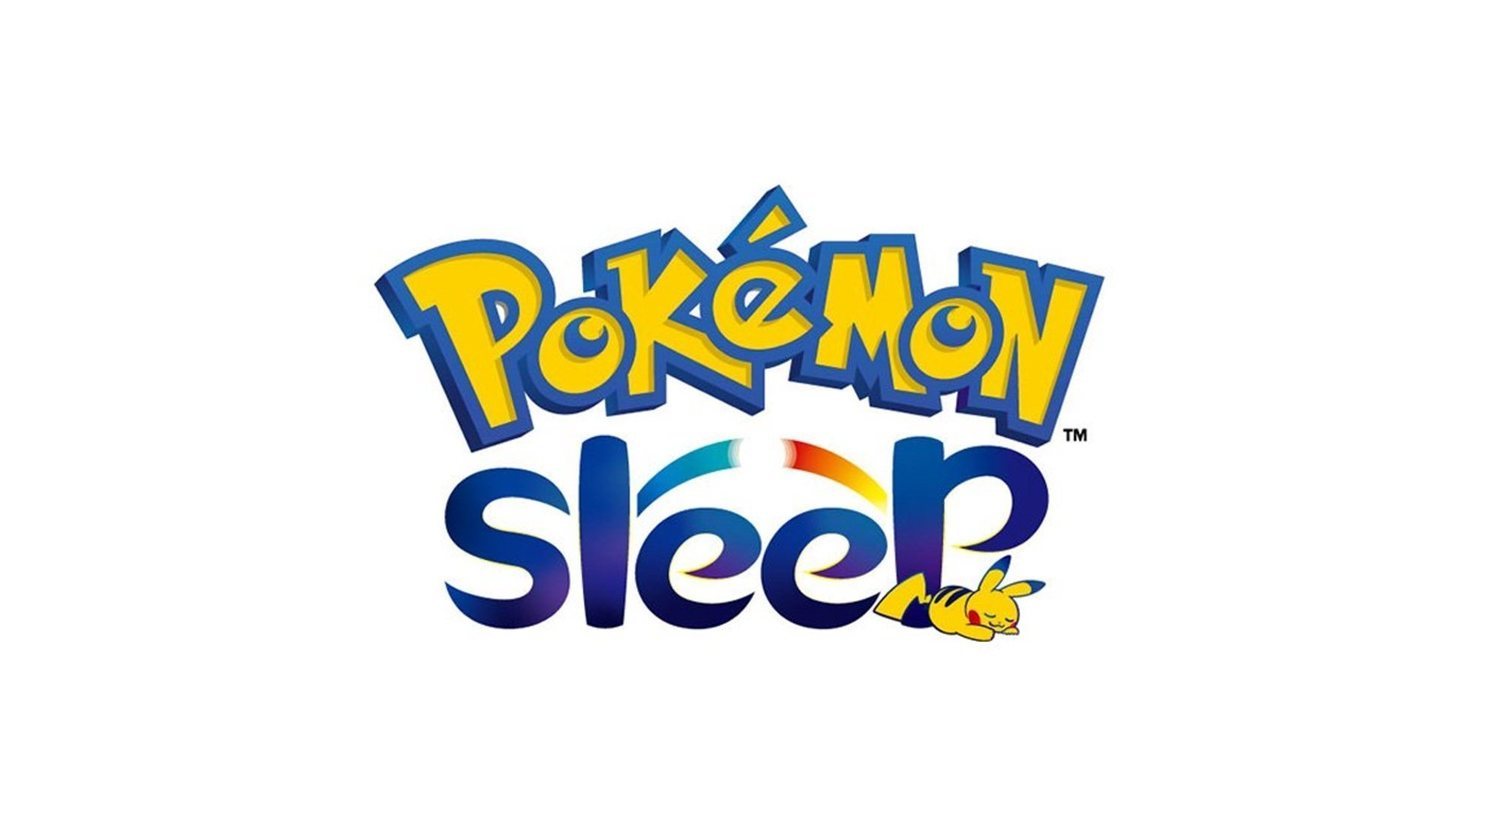 Pokémon Sleep: Pokémon se preocupa por nuestro descanso